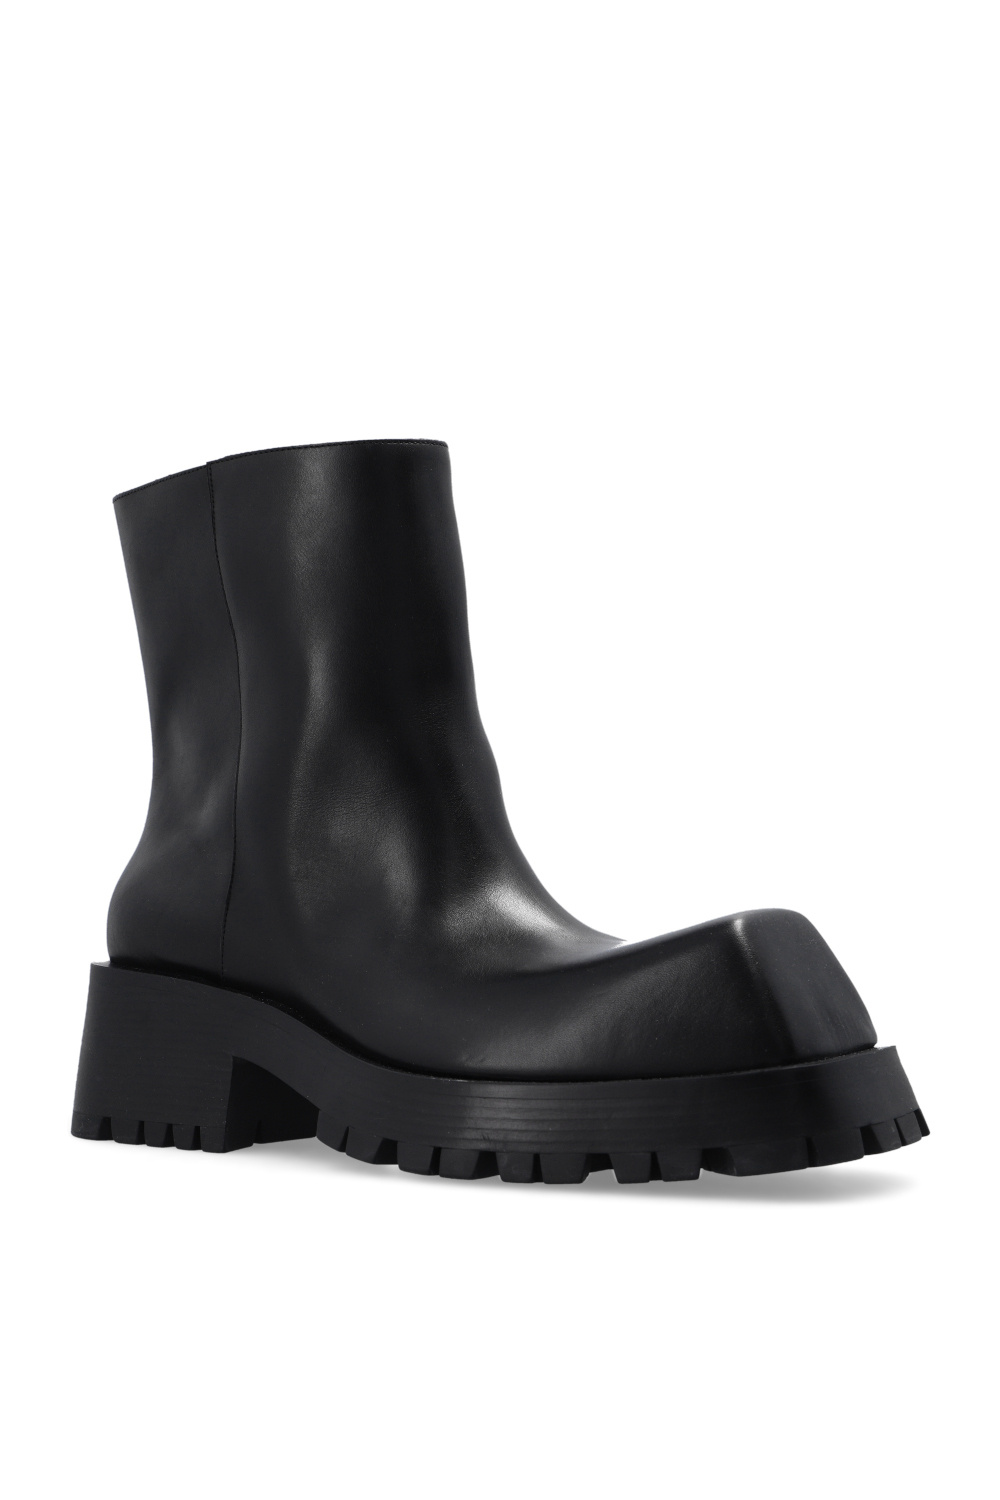 Balenciaga ‘Trooper’ ankle boots